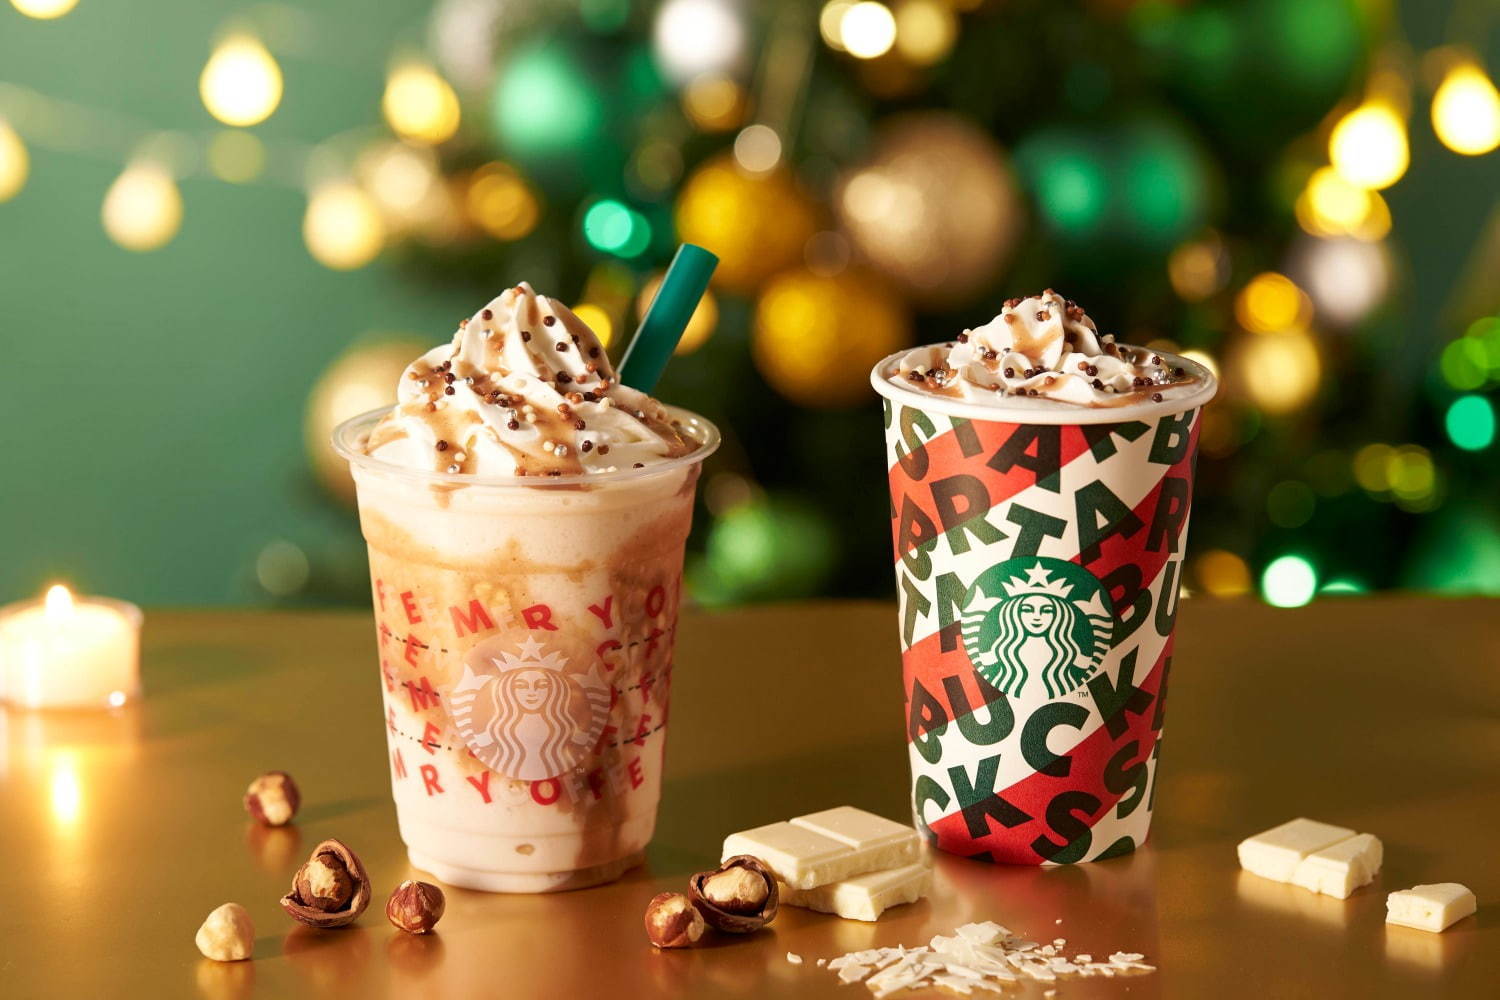 Starbucks Japan unveils new Nutty White Chocolate Frappuccino for Christmas 2019. SoraNews24 -Japan News